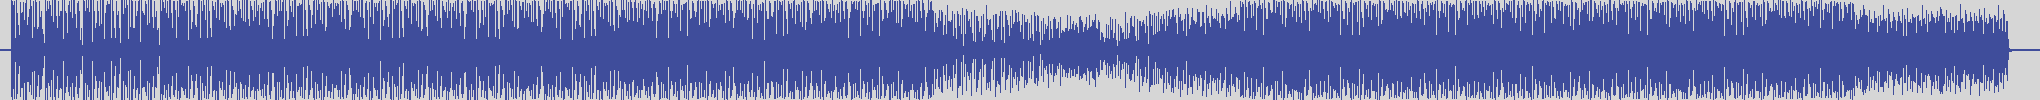 nf_boyz_records [NFY049] Someone Blitz - Corrida [Tito Goya's Tech Lake Mix] audio wave form